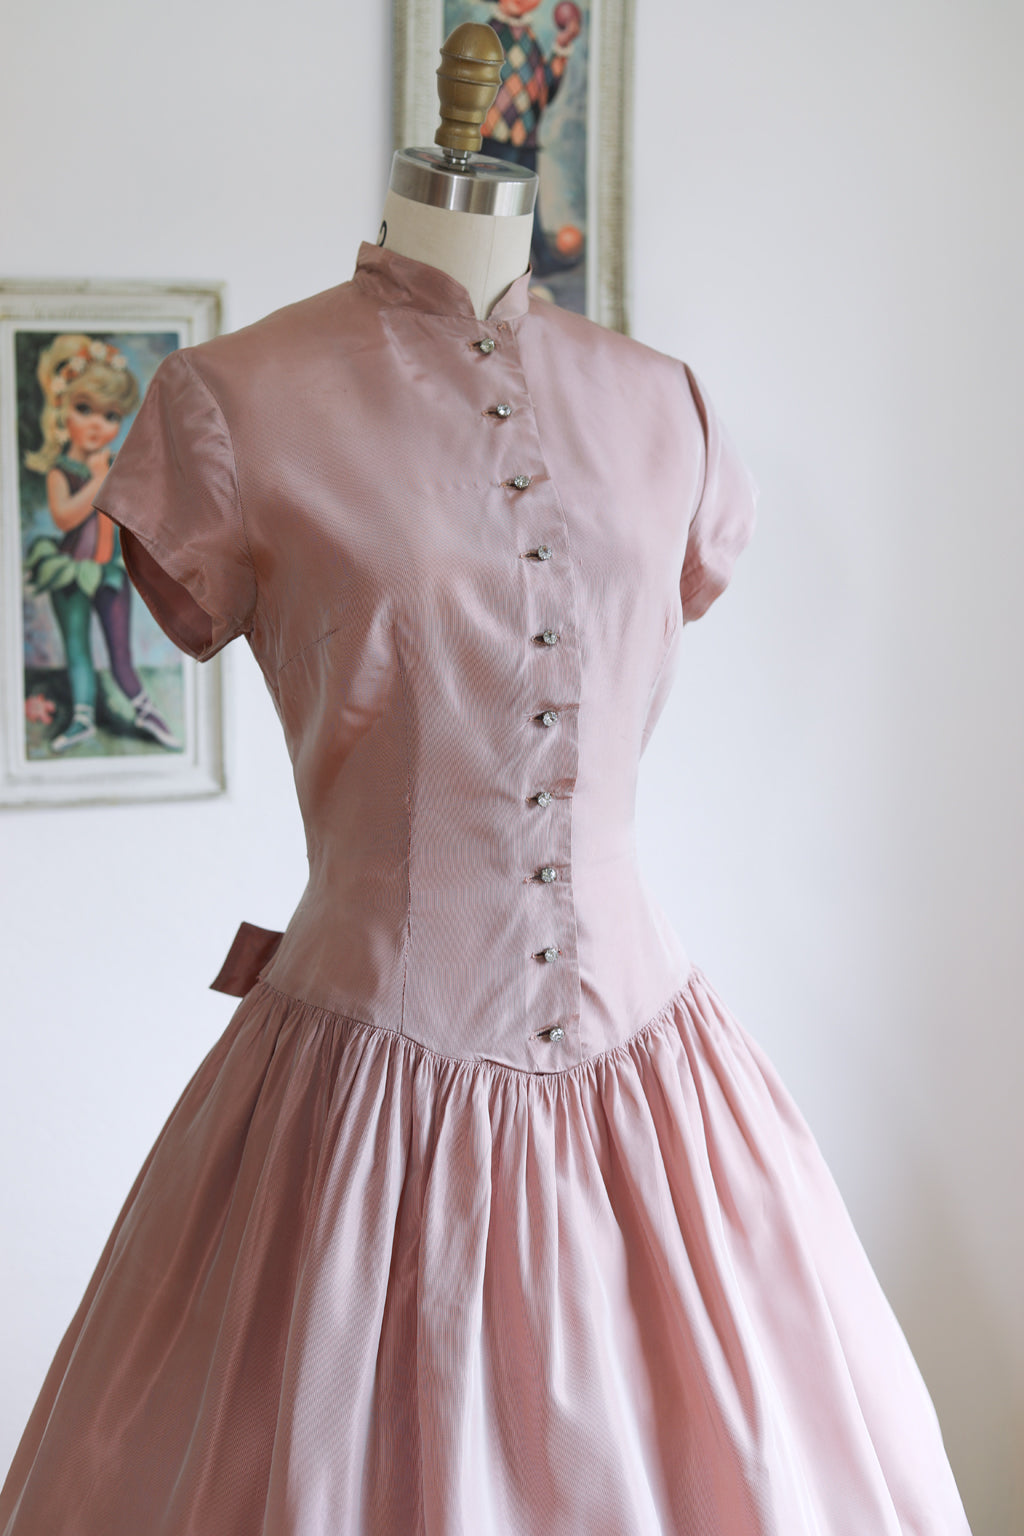 Vintage 1950s Party Dress - Darling Rose Pink Sharkskin Taffeta Vicky Vaughn w Rhinestones + Bustle Size XS - S